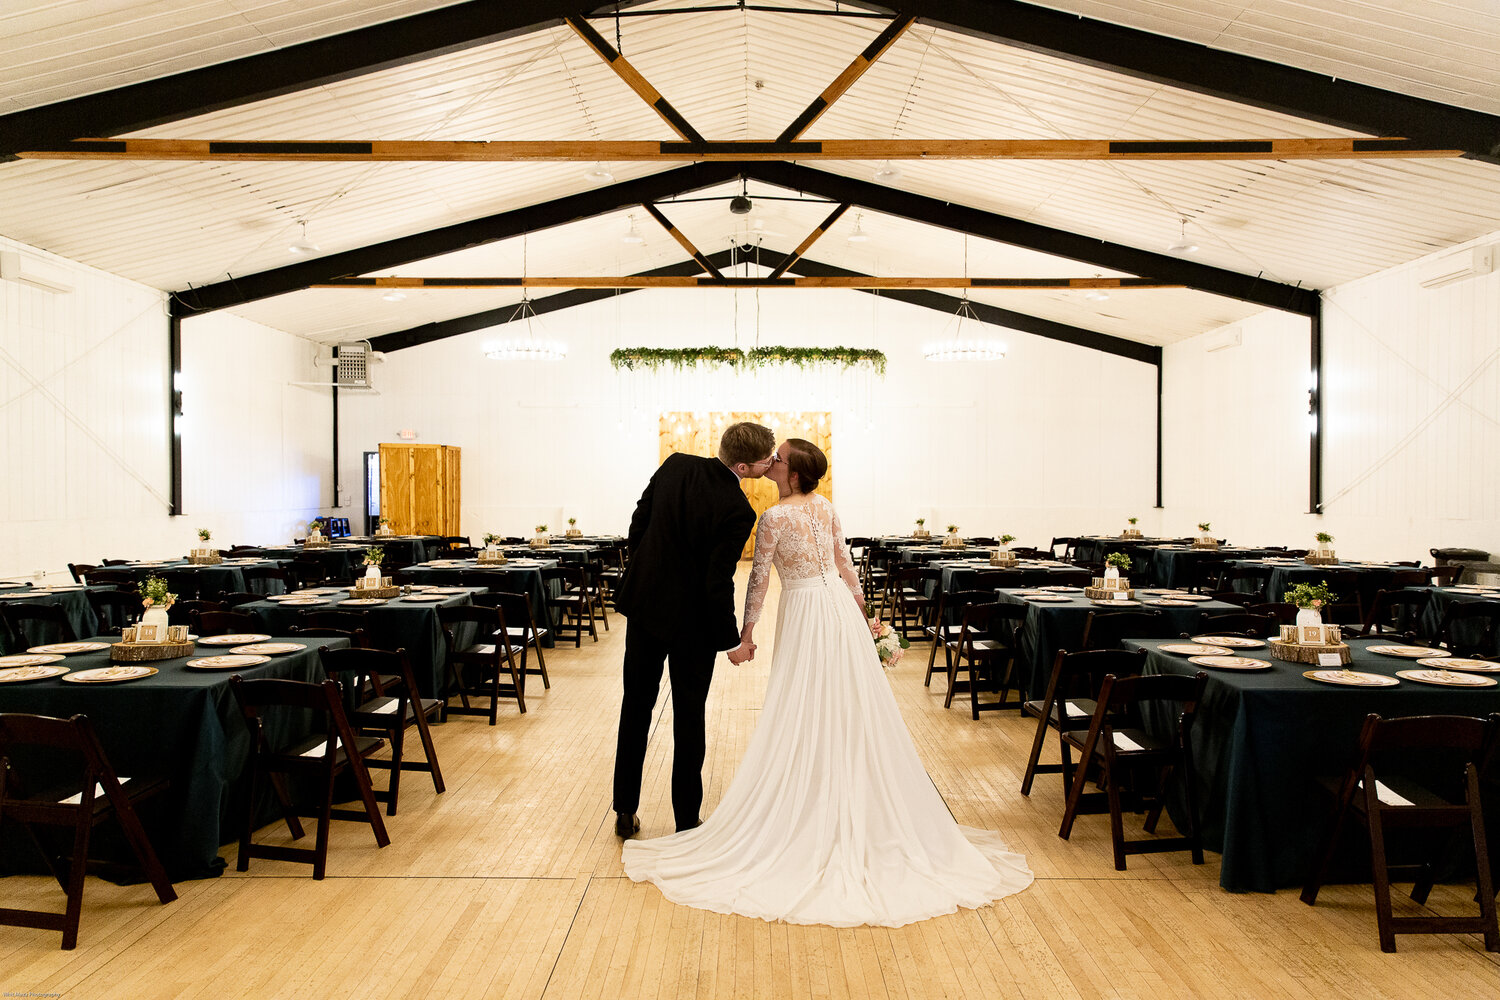 Top 9 Amazing Wedding Venues in Oshkosh WI